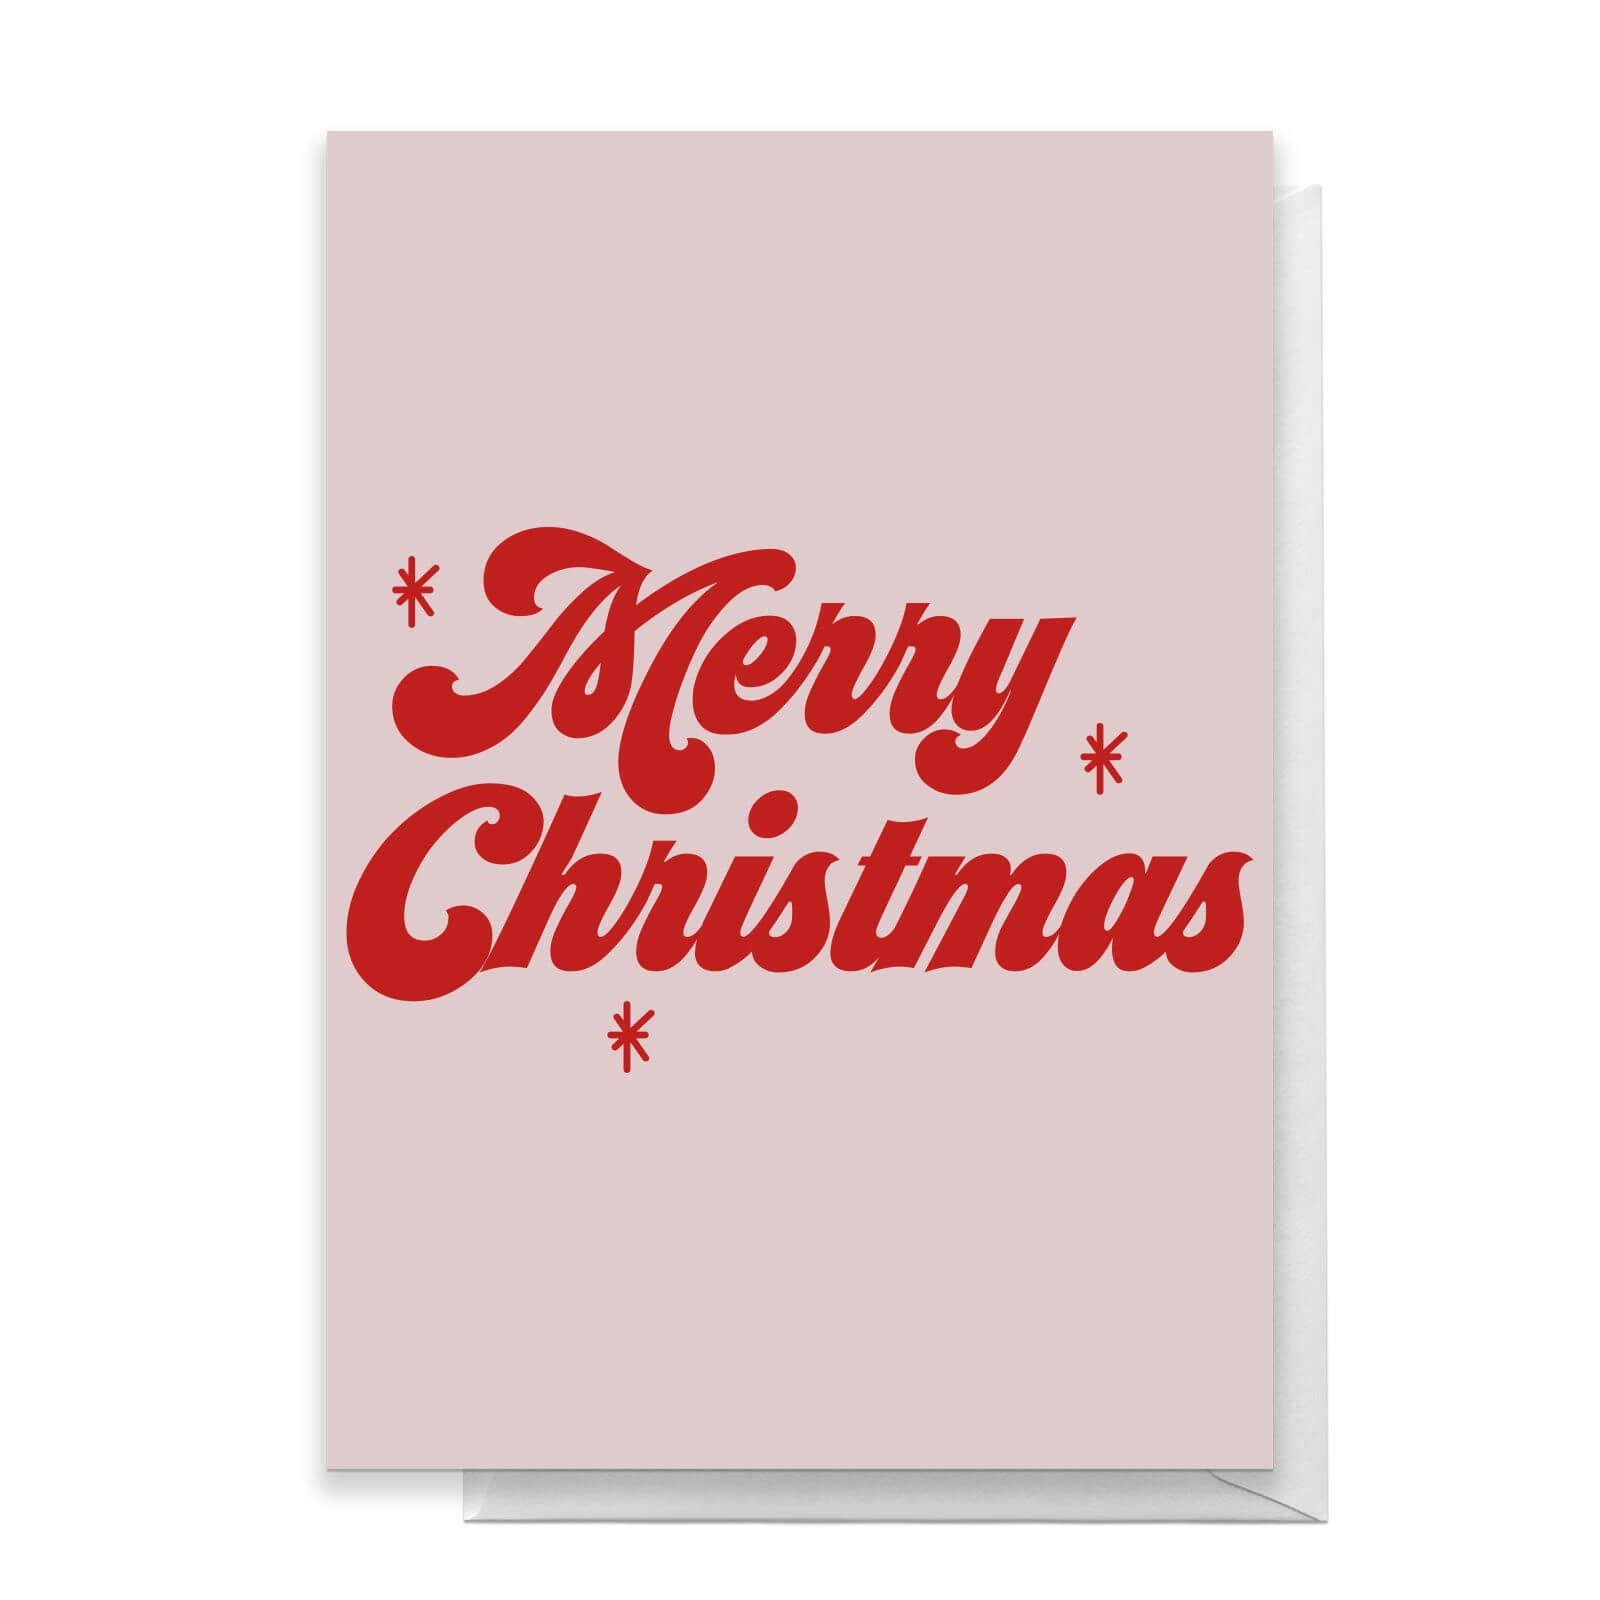 Merry Christmas Greetings Card - Standard Card